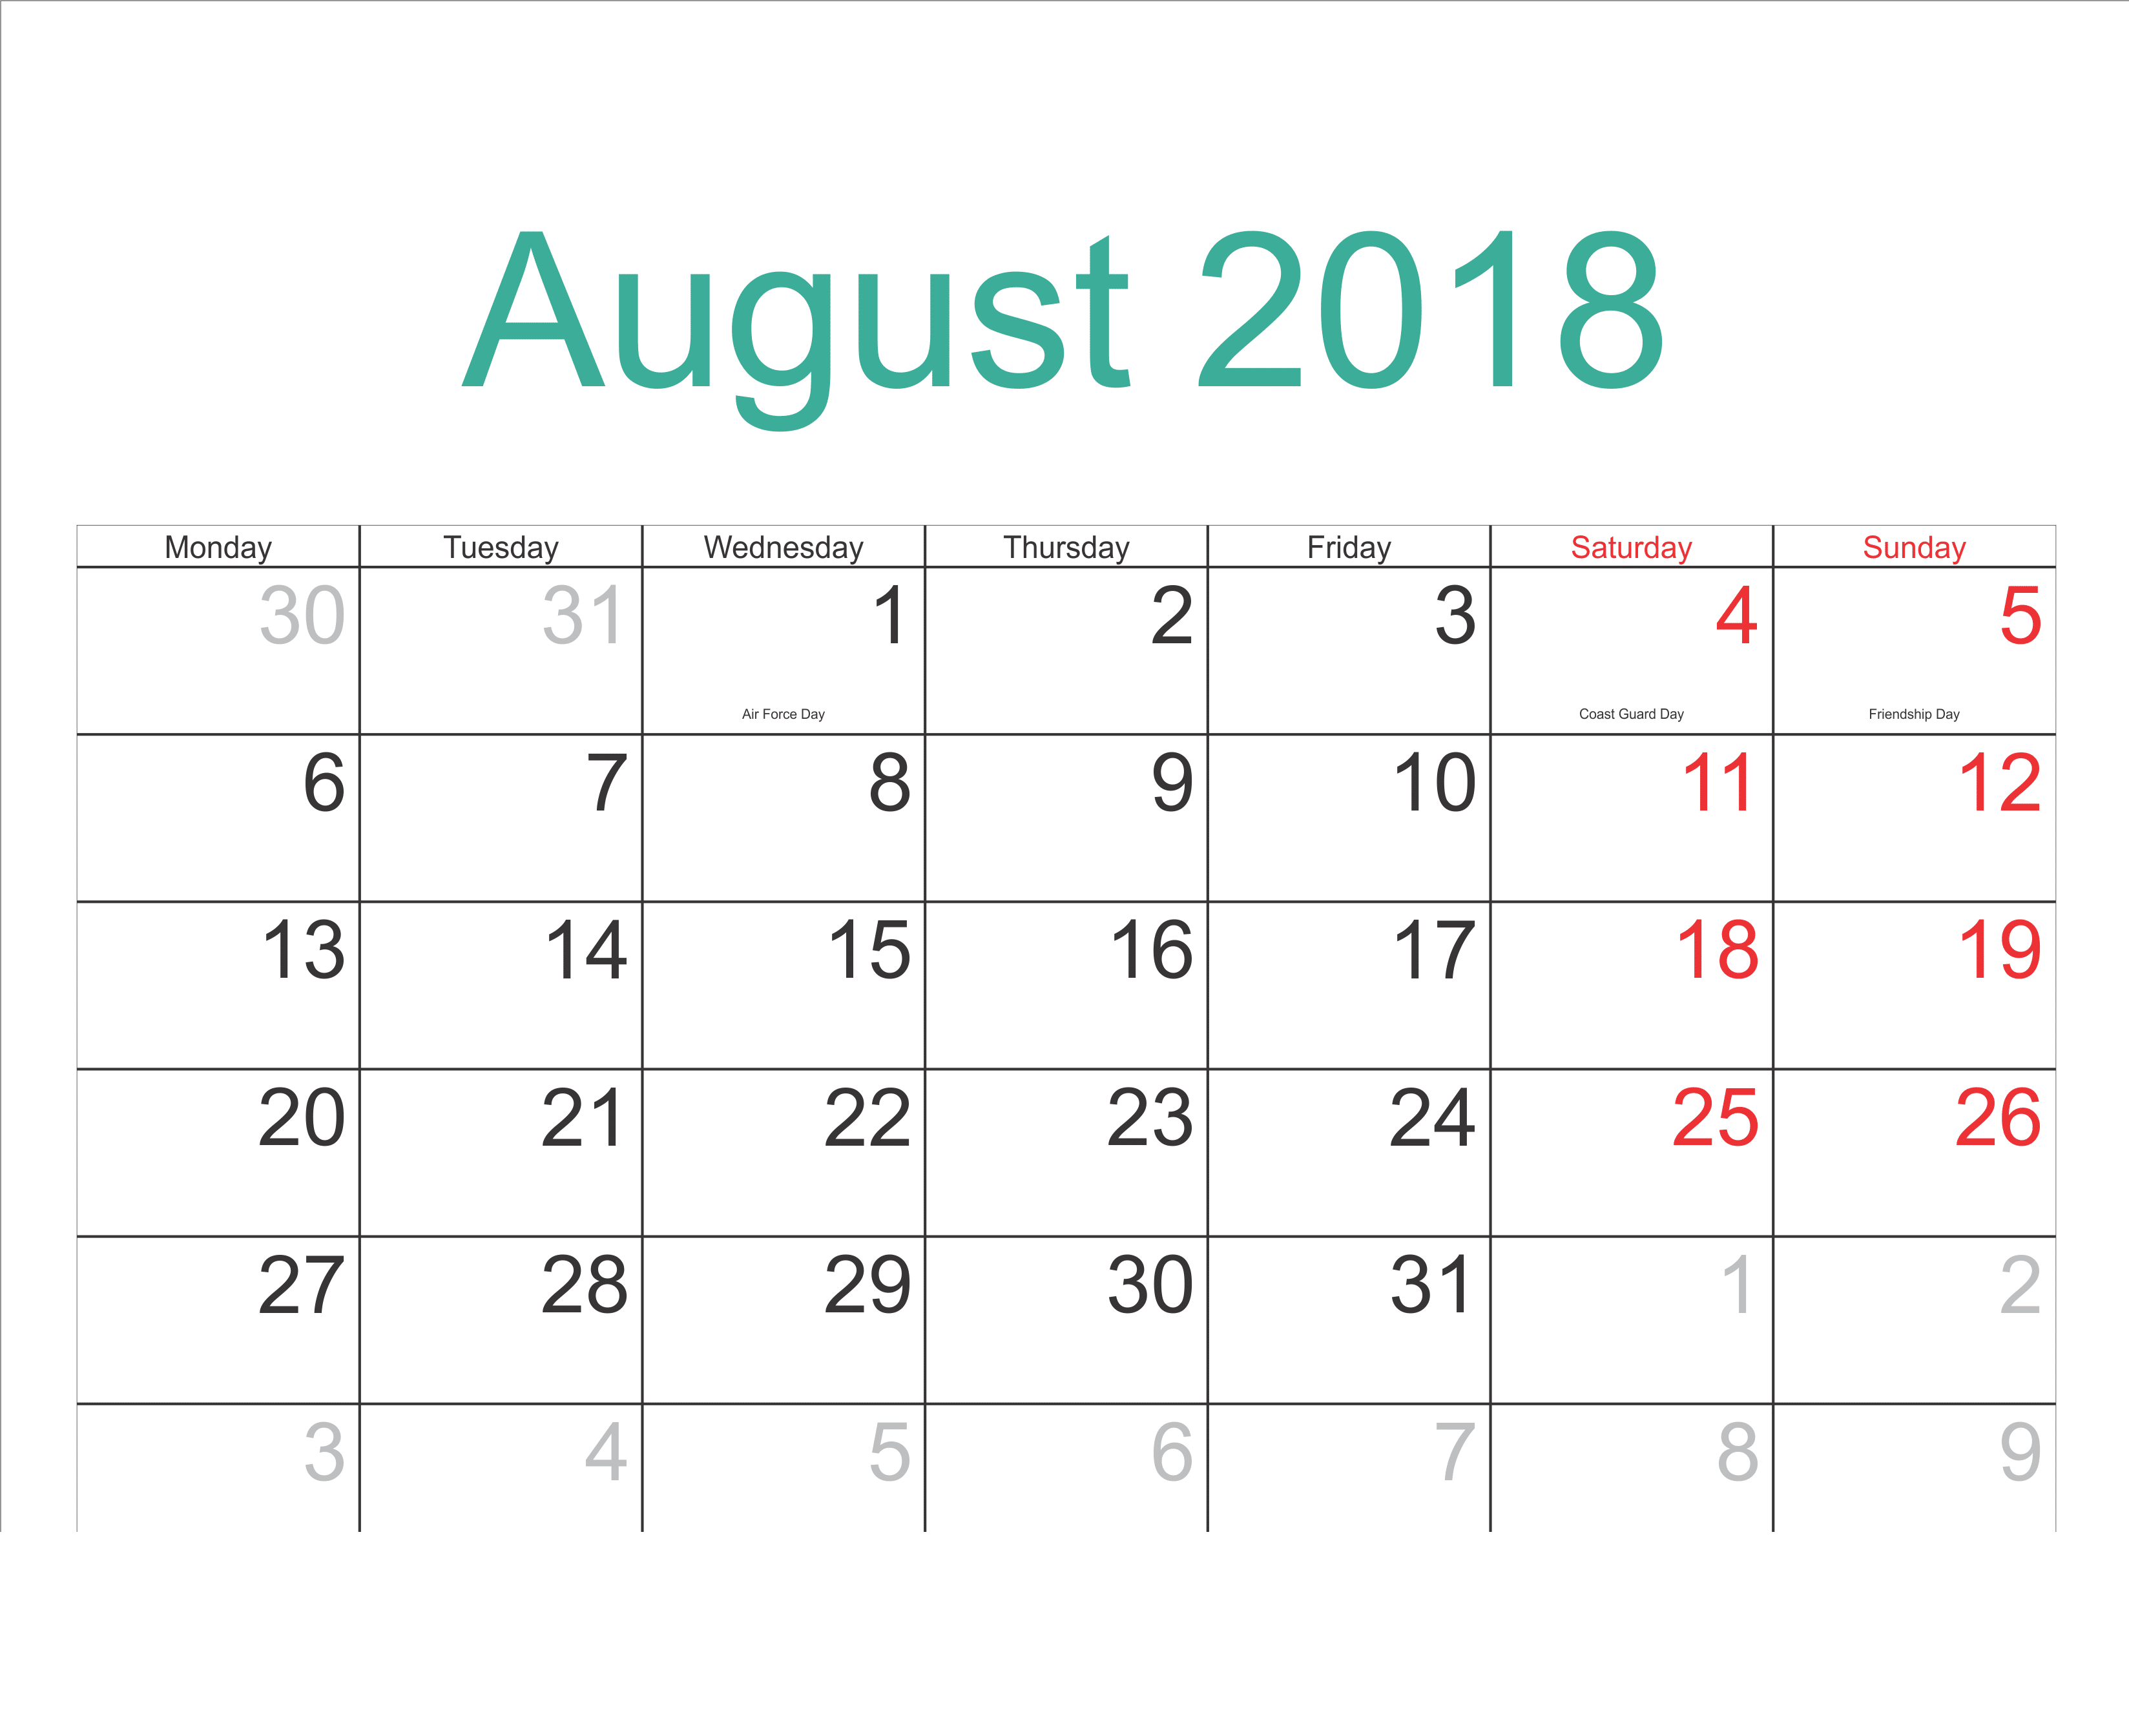 august-2018-calendar-with-public-holidays-oppidan-library